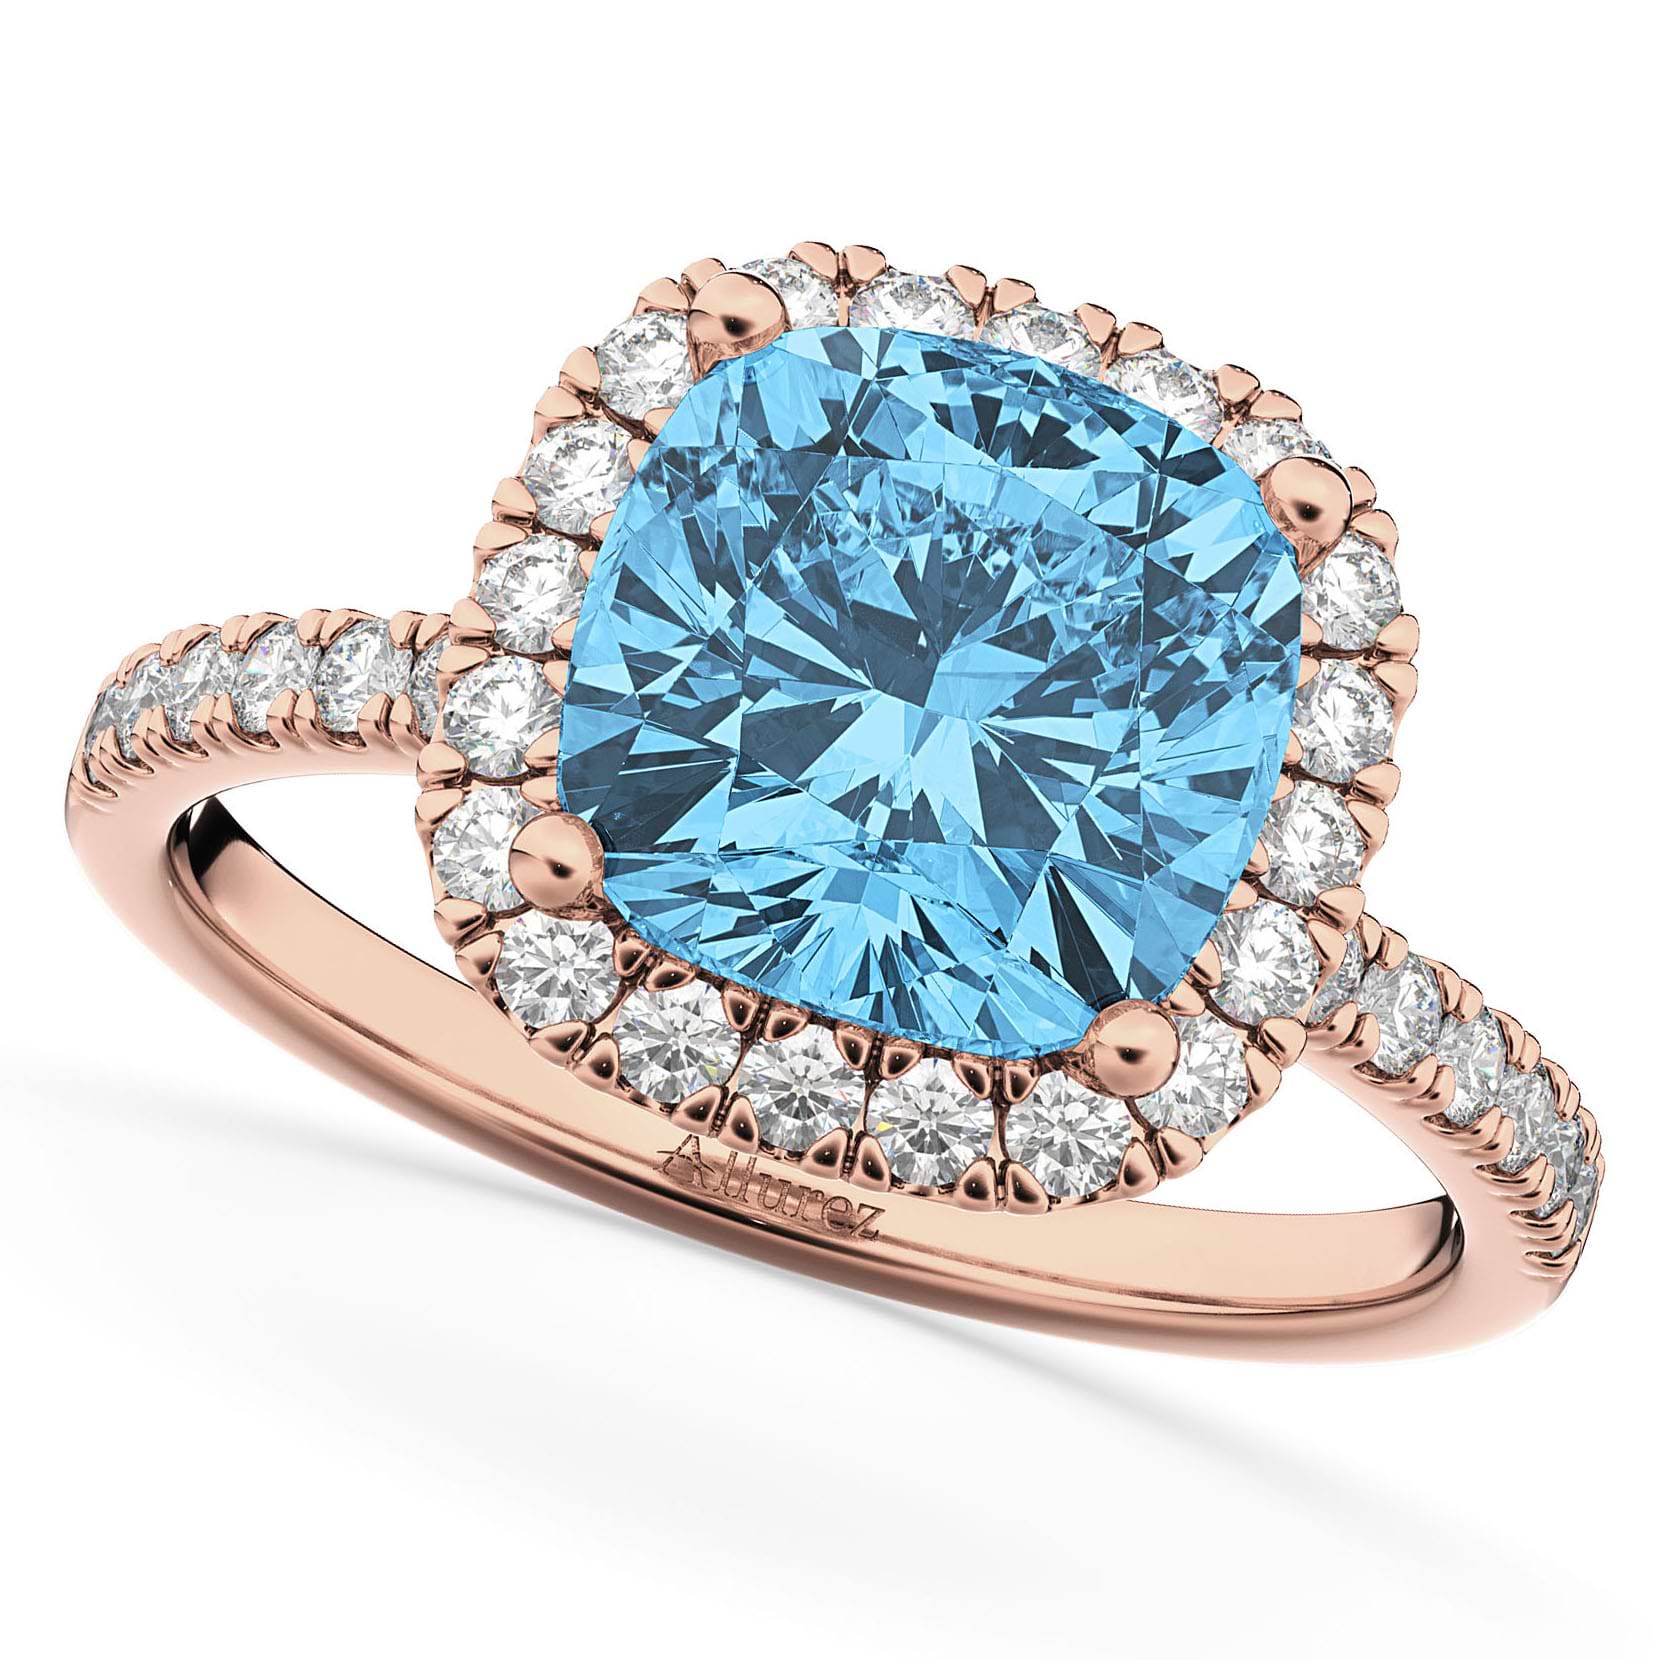 Cushion Cut Halo Blue Topaz & Diamond Engagement Ring 14k Rose Gold (3.11ct)